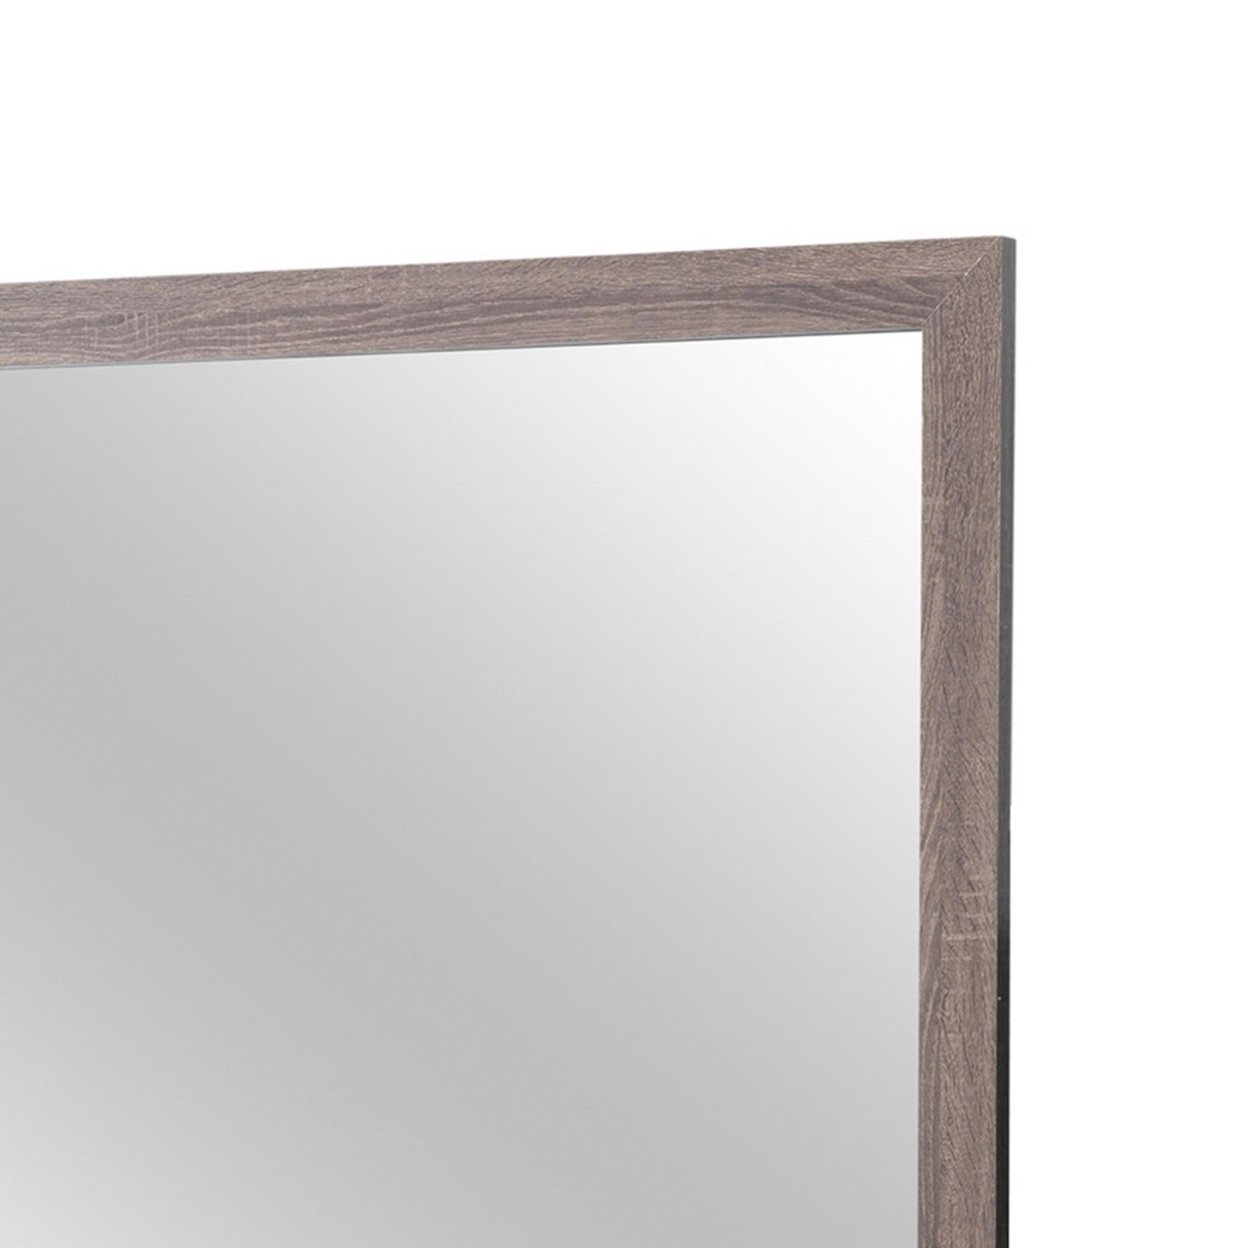 Mirror With Sleek Wooden Frame And Grain Details, Brown- Saltoro Sherpi